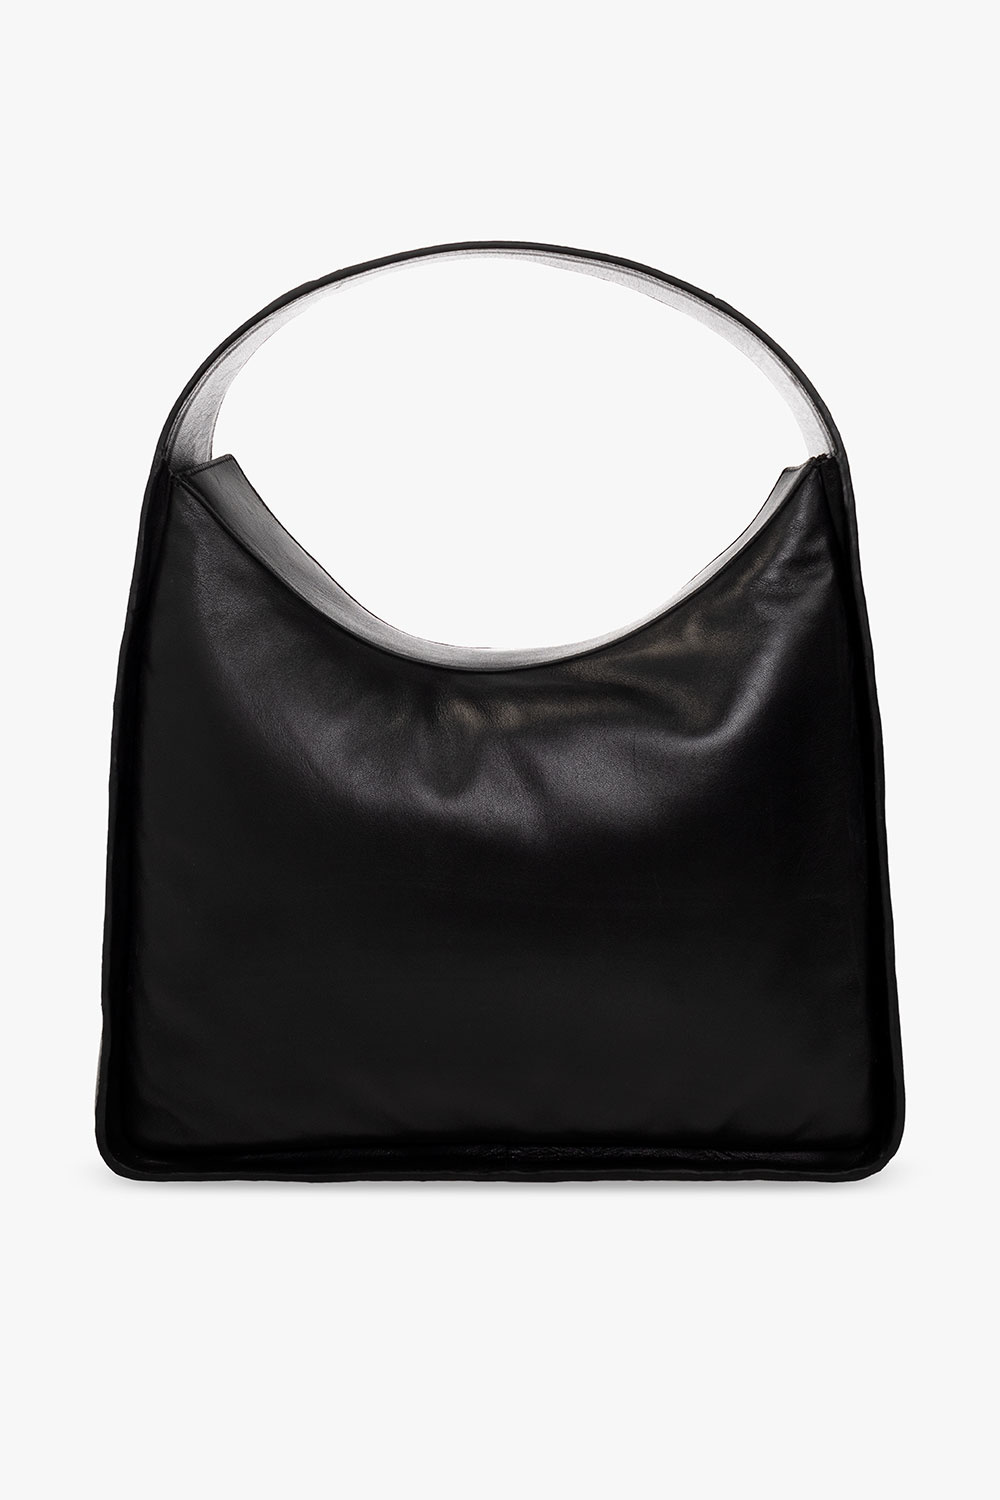 Tory Burch Kira Chevron Soft Straw Small Flap Shoulder Bag in Black